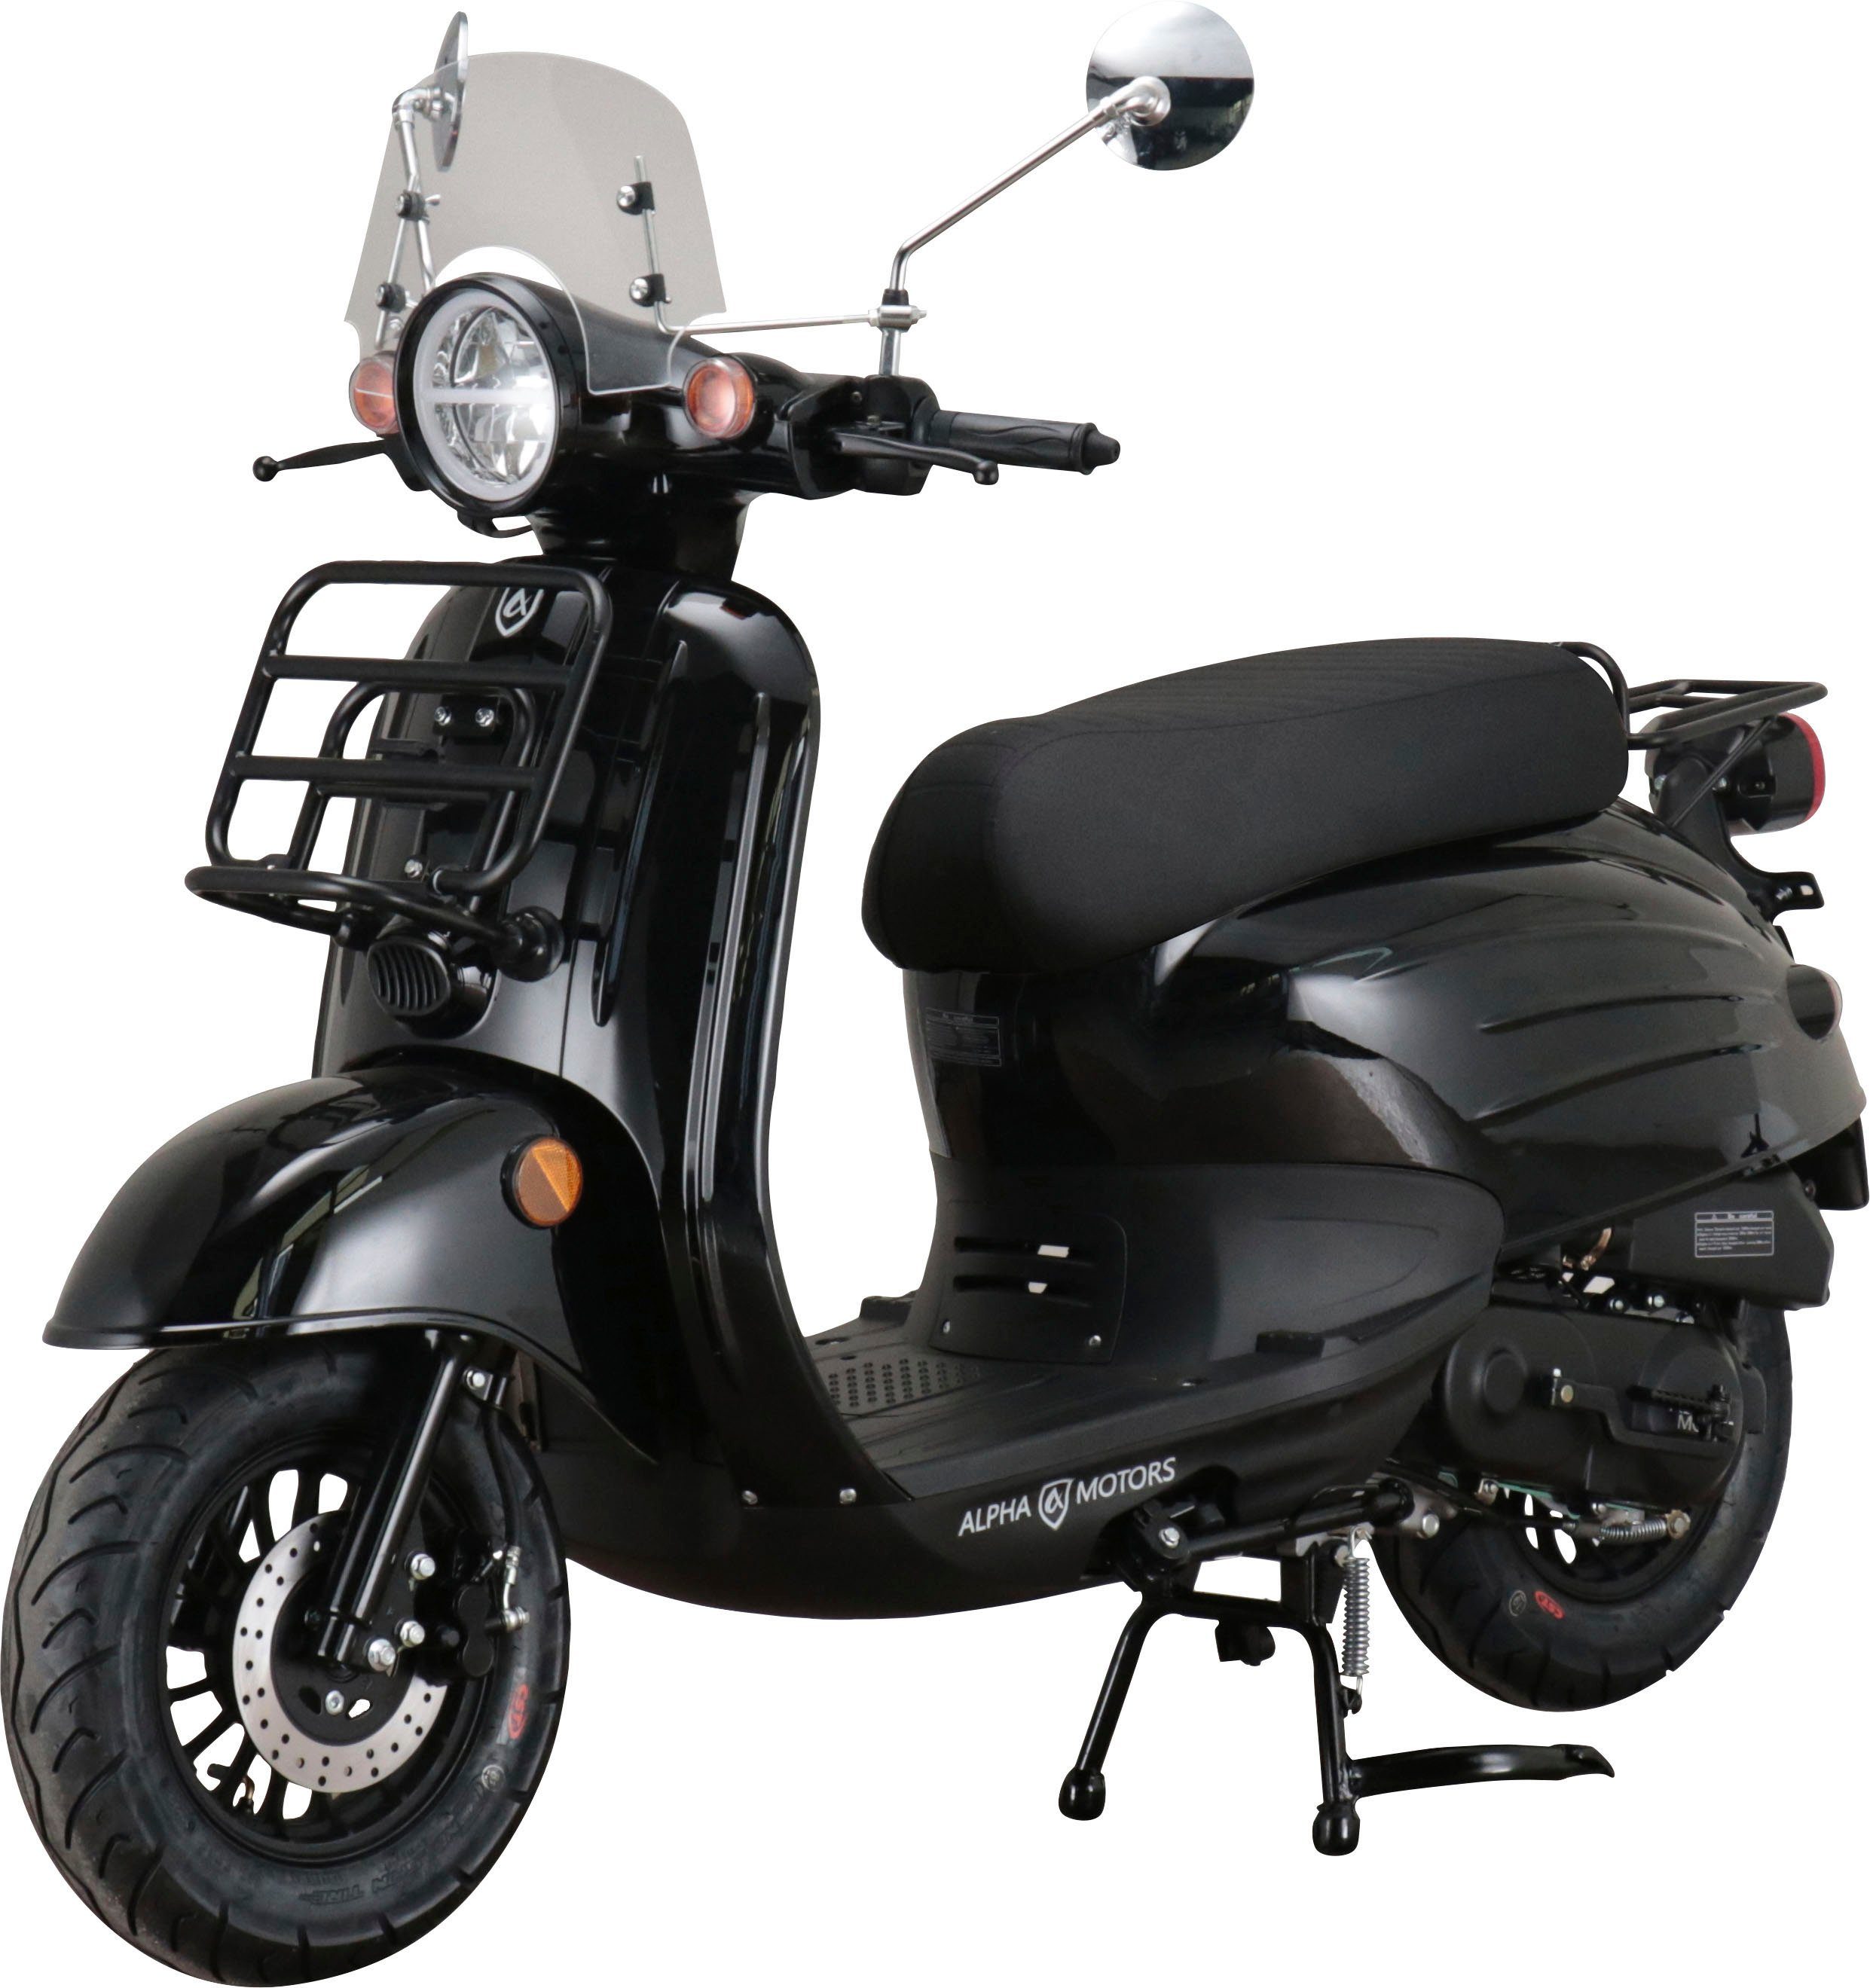 Alpha Motors Motorroller Adria, 45 ccm, km/h, Windschild 50 Euro inkl. 5